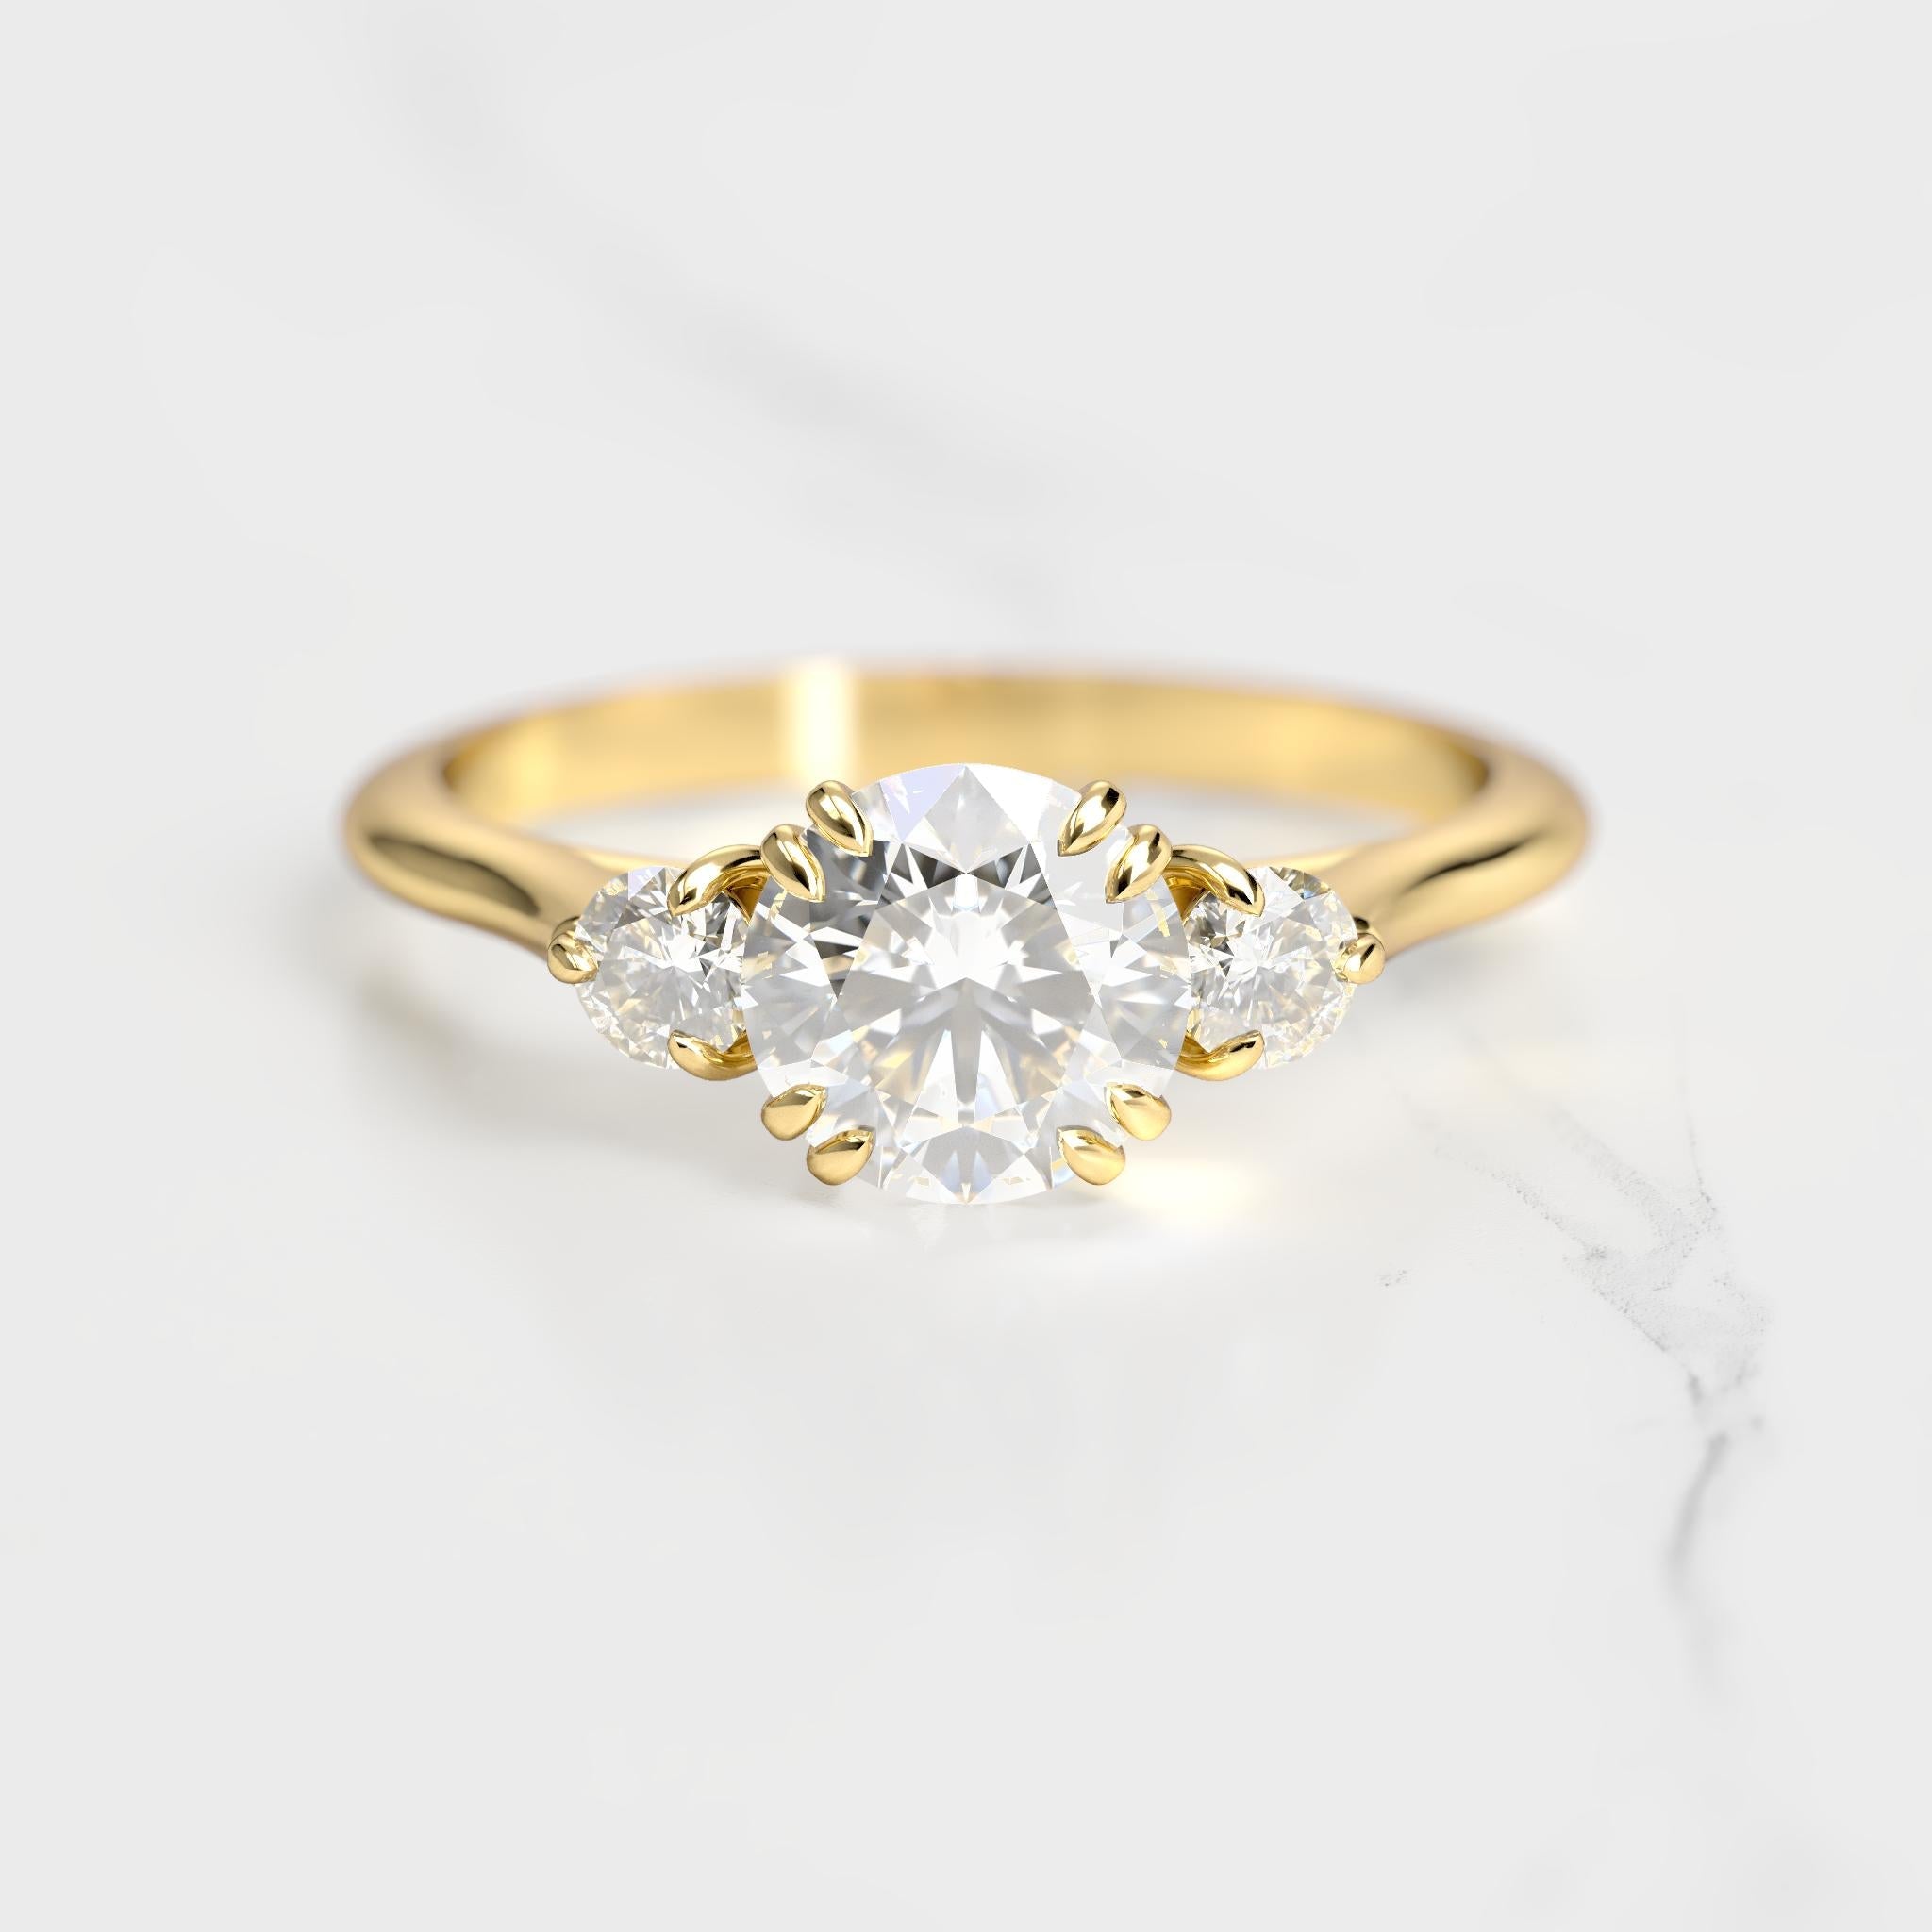 Round Diamond Ring With Accent Stones - 14k rose gold / 0.3ct / lab diamond